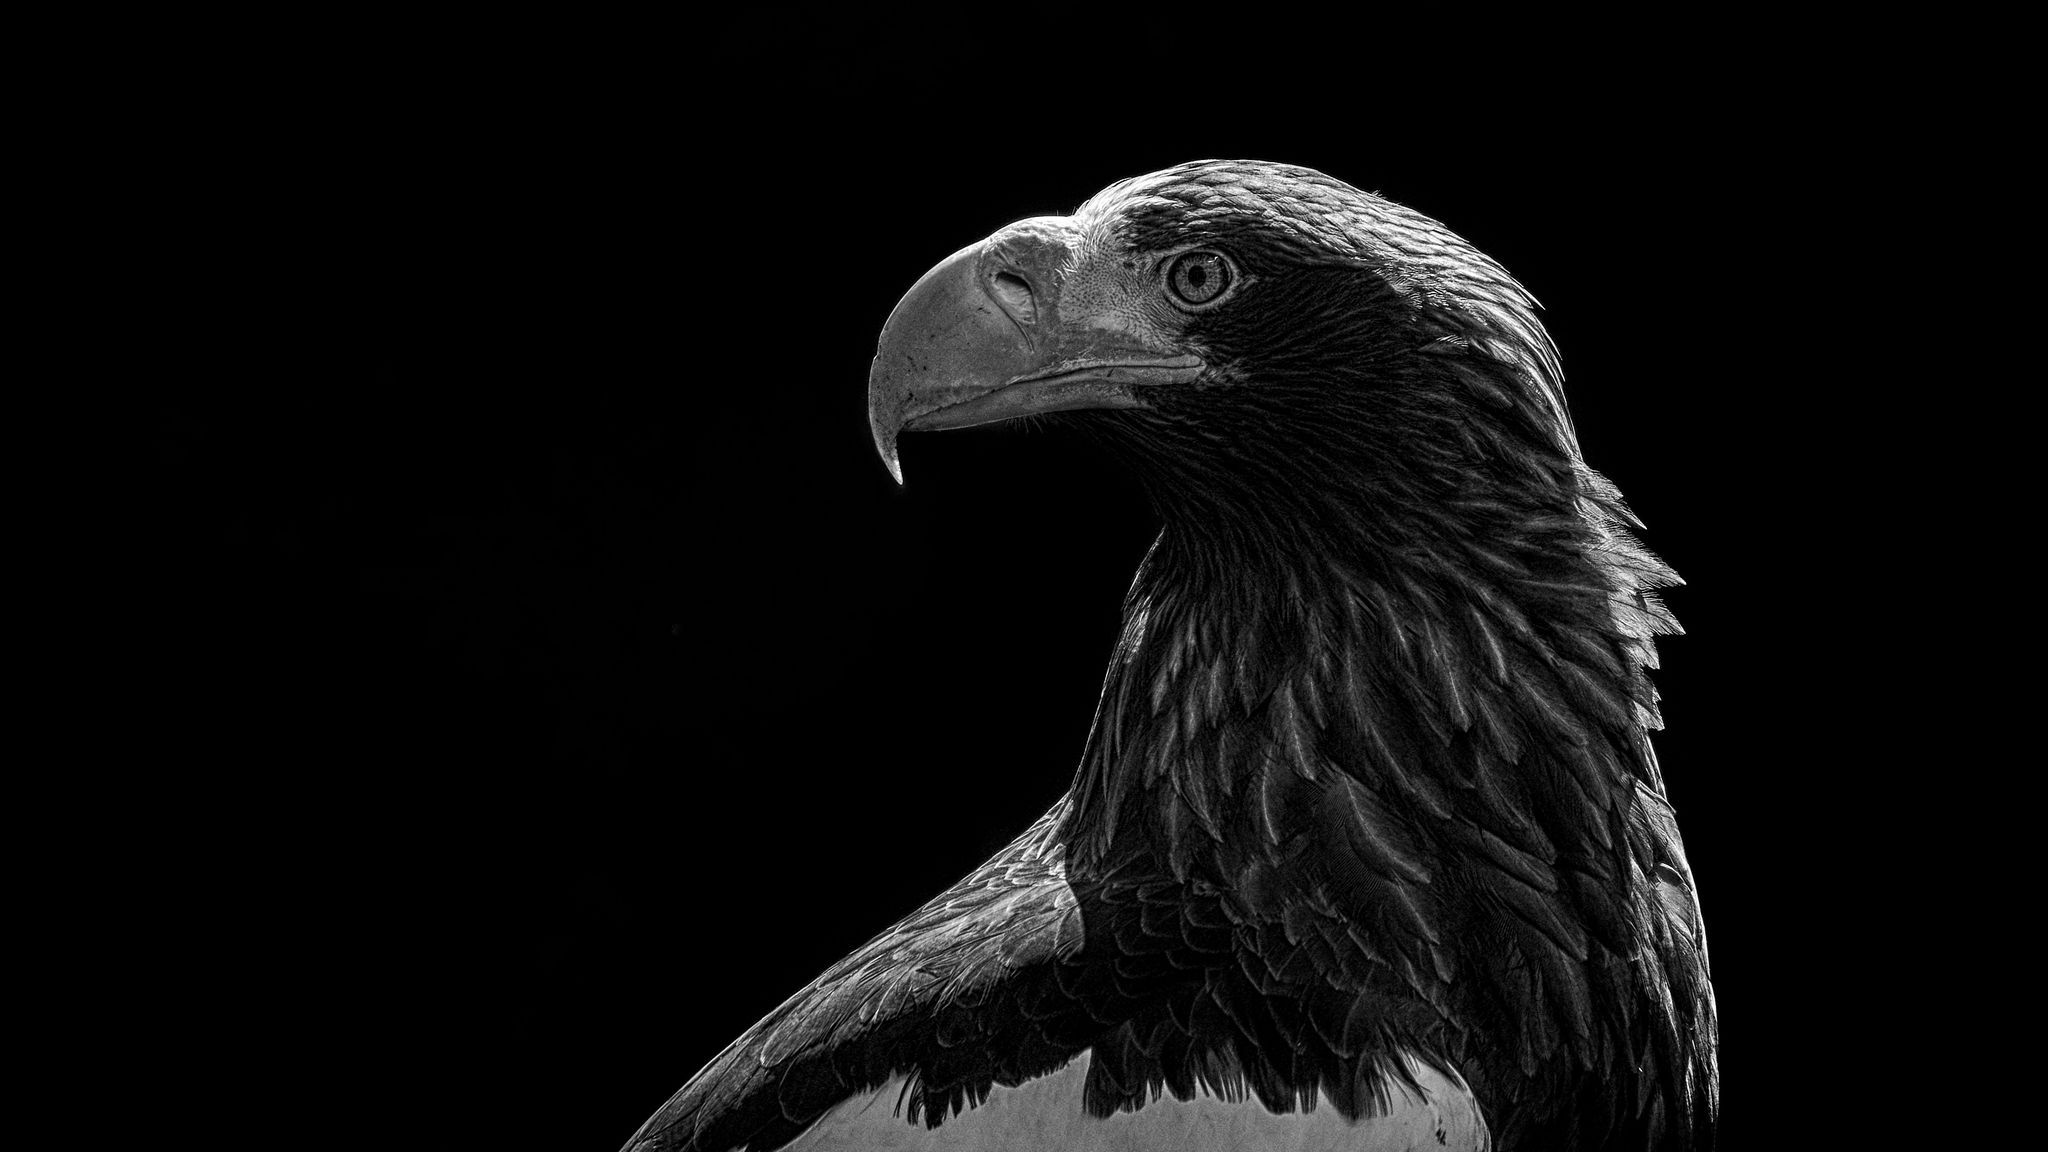 Download wallpaper 2048x1152 eagle, bird, bw, predator ultrawide